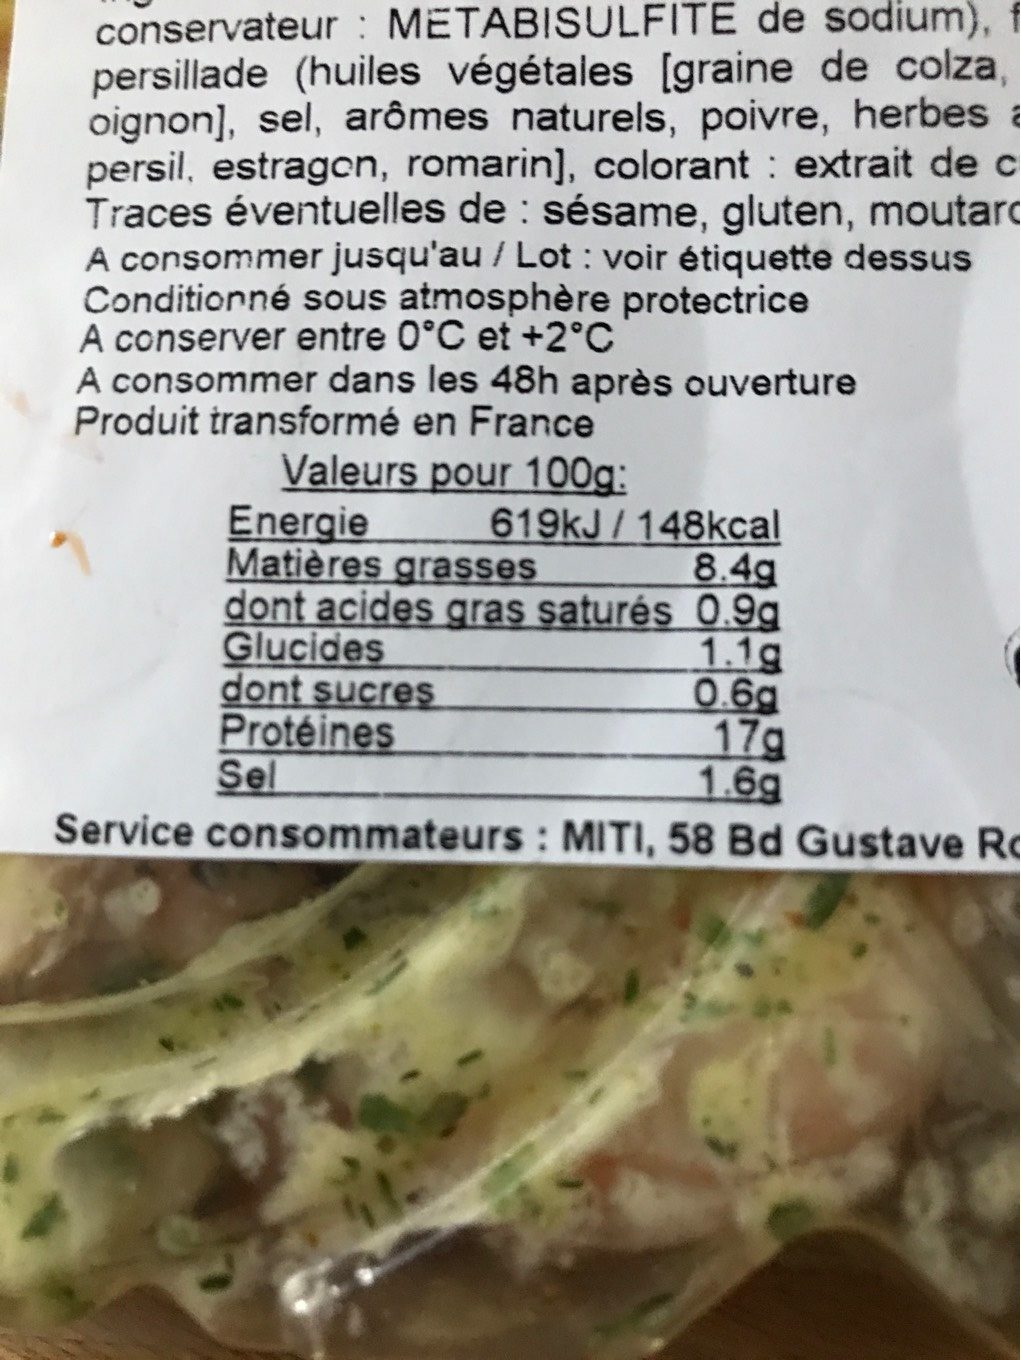 Crevettes decortiquéessauce persillade - Nutrition facts - fr